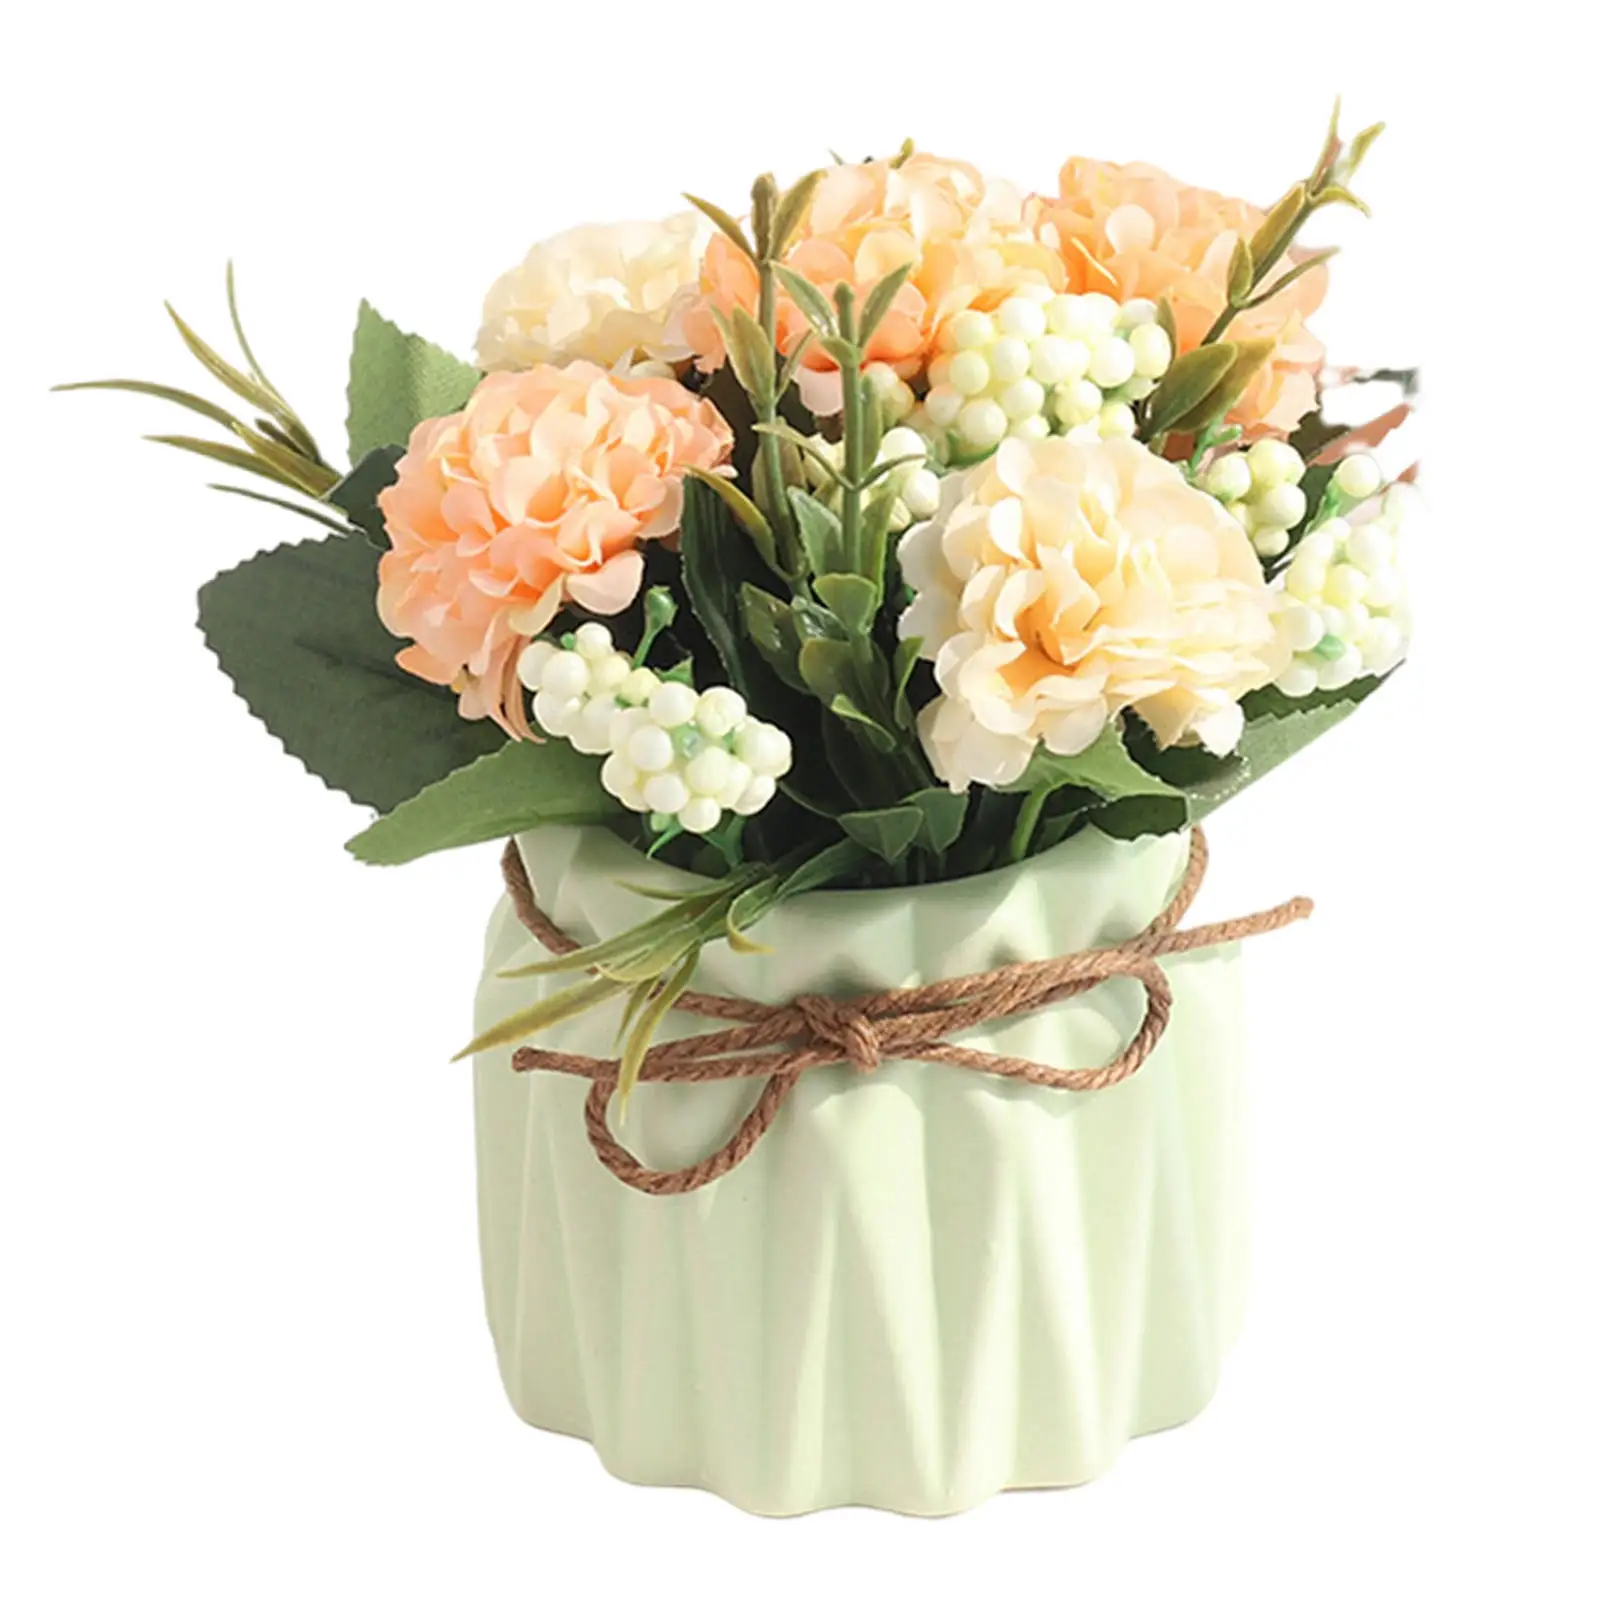 Artificial Flower Fake Simulation Hydrangea Flower Ceramic Vase Realistic Faux Plant for Table Centerpieces Home Wedding Decor